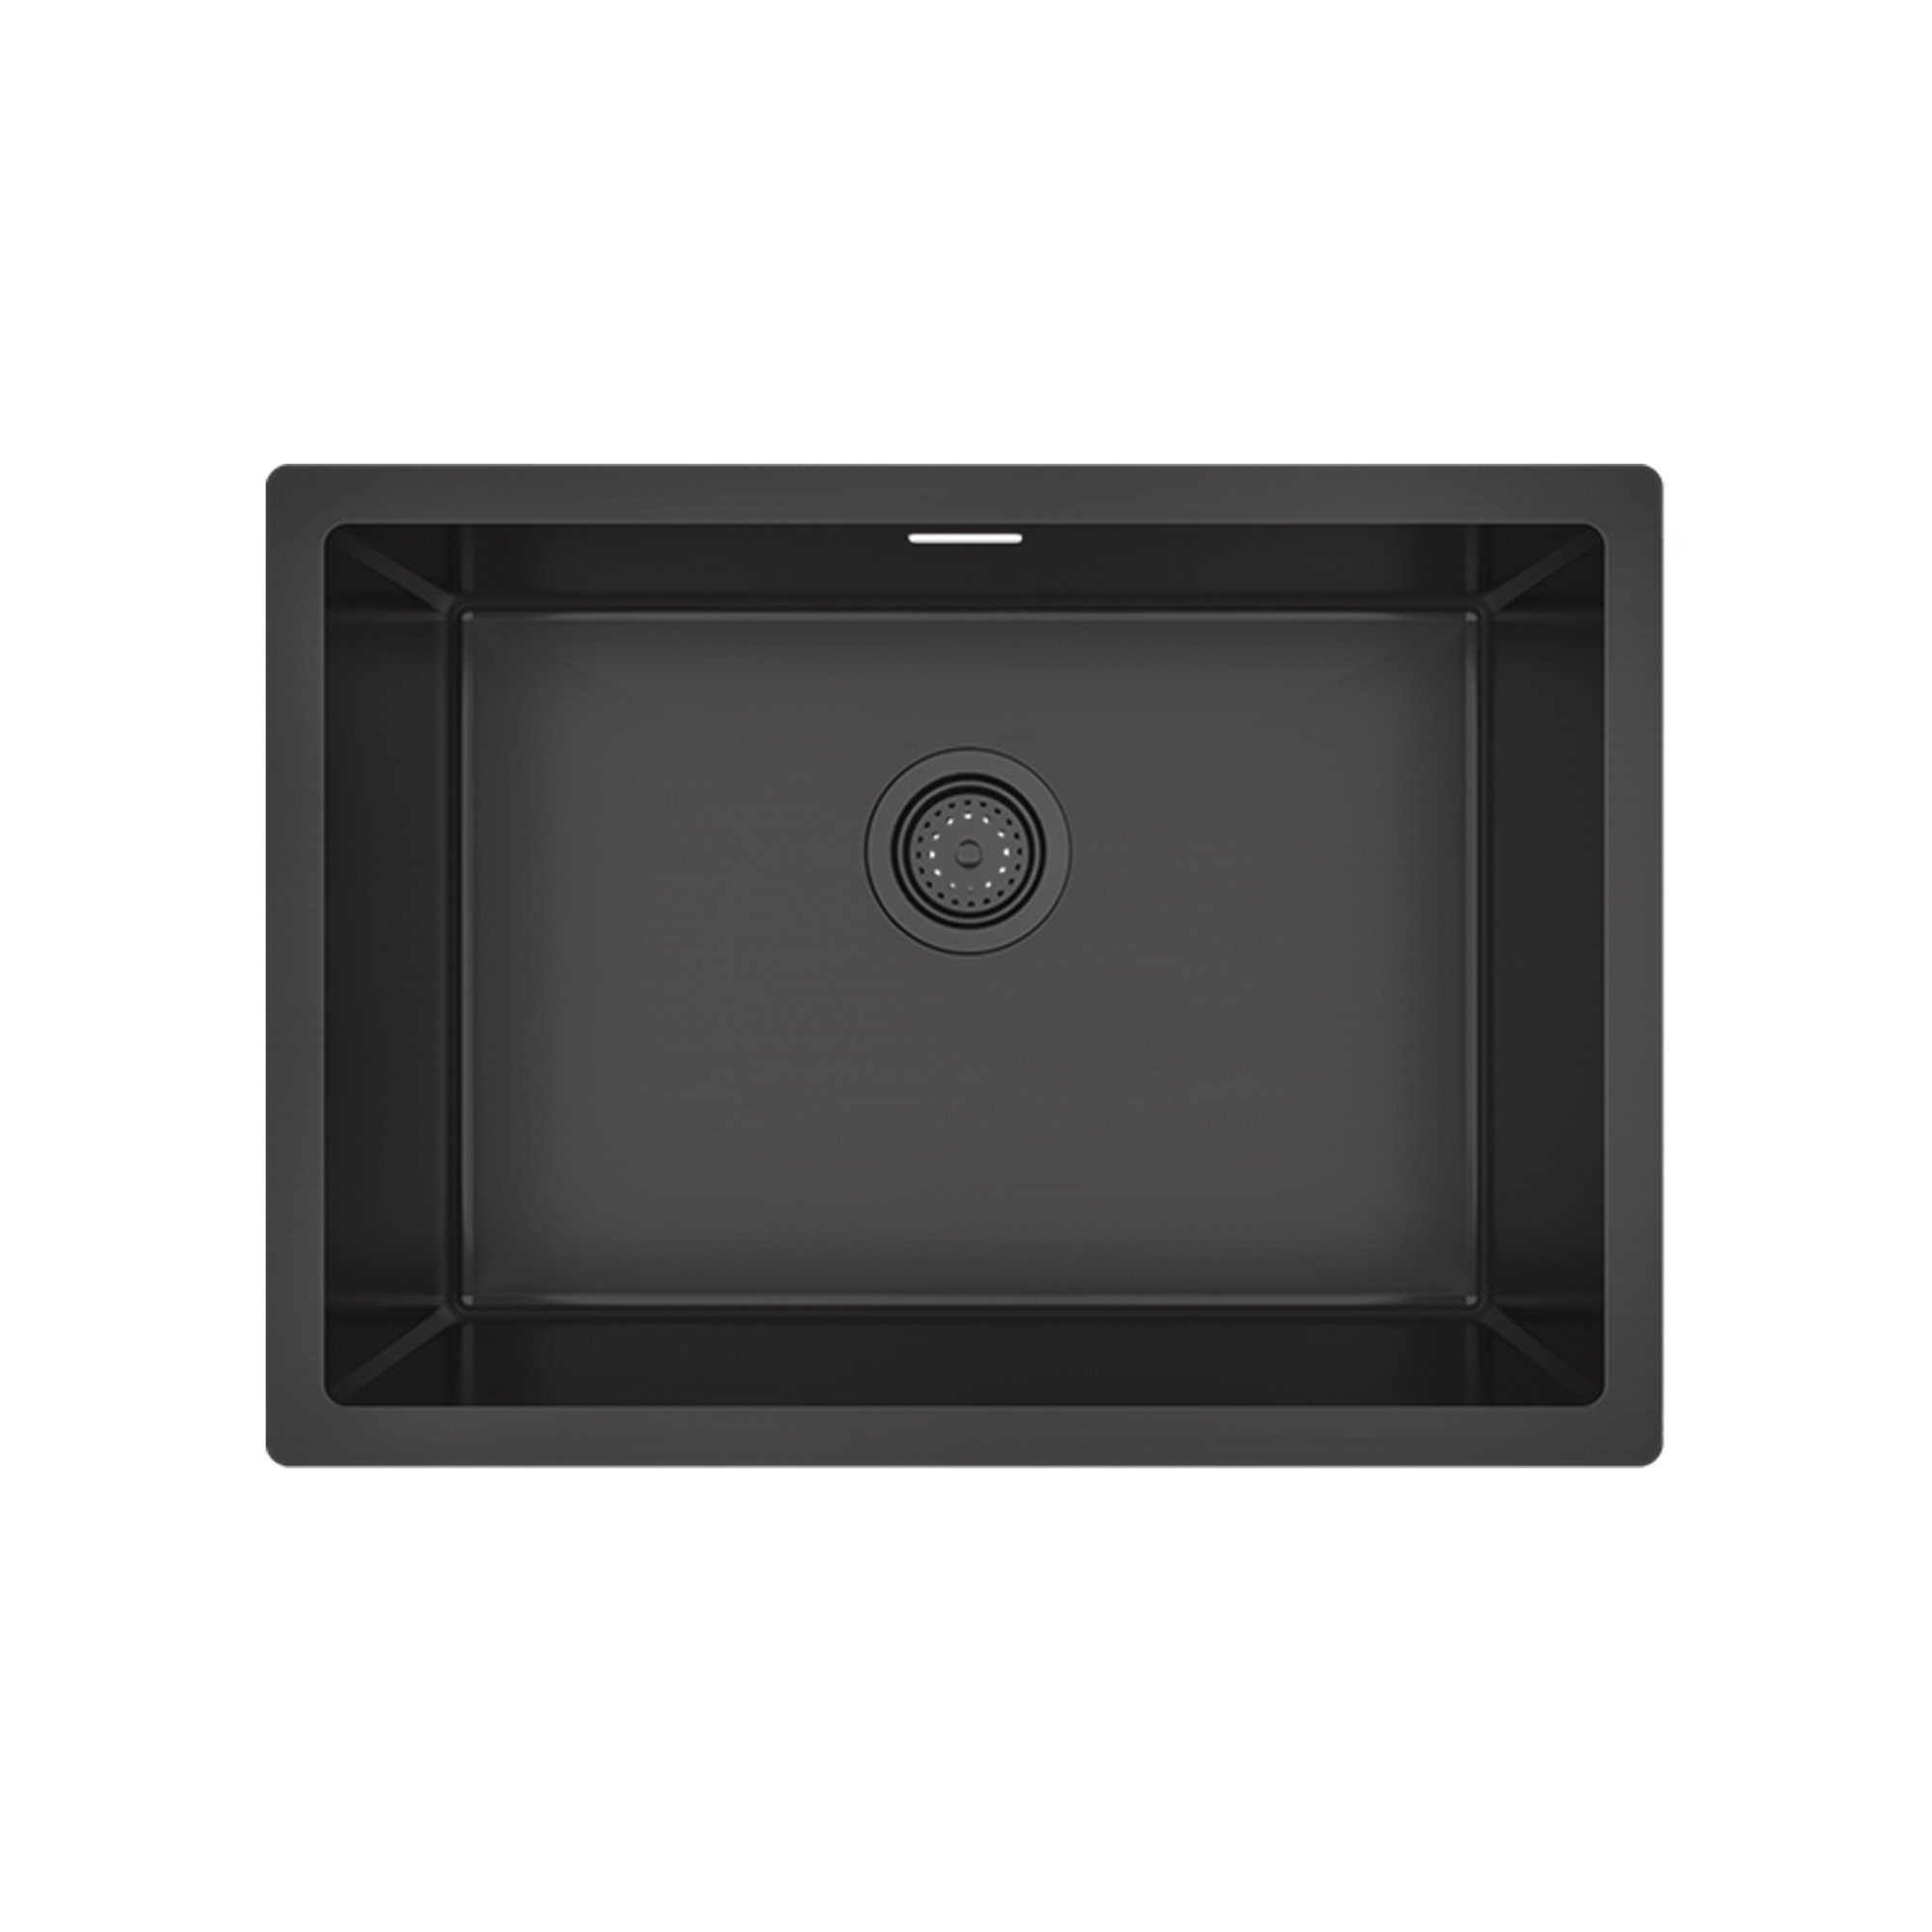 Küchenspüle schwarz, rechteckig, Küchenspüle HomeGuru cm, (Packung) 60x45x21.5 cm 60.0/43.0 Lebensmittelqualität